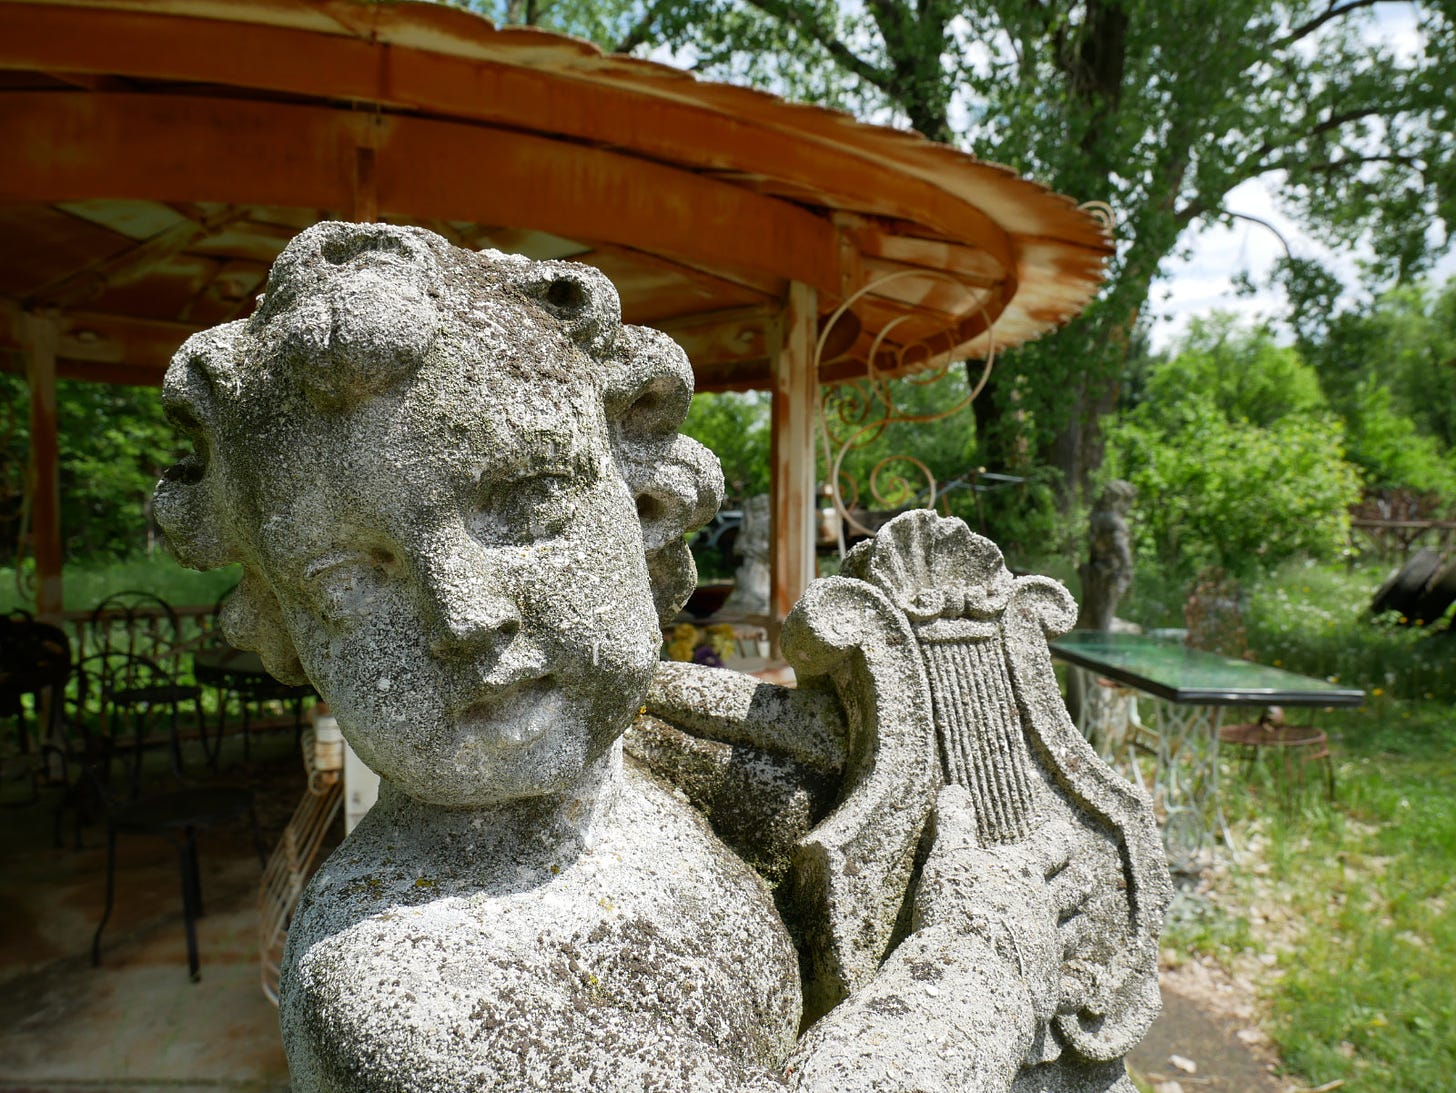 Statue of cherub at Dr. Evermor's Sculpture Park.